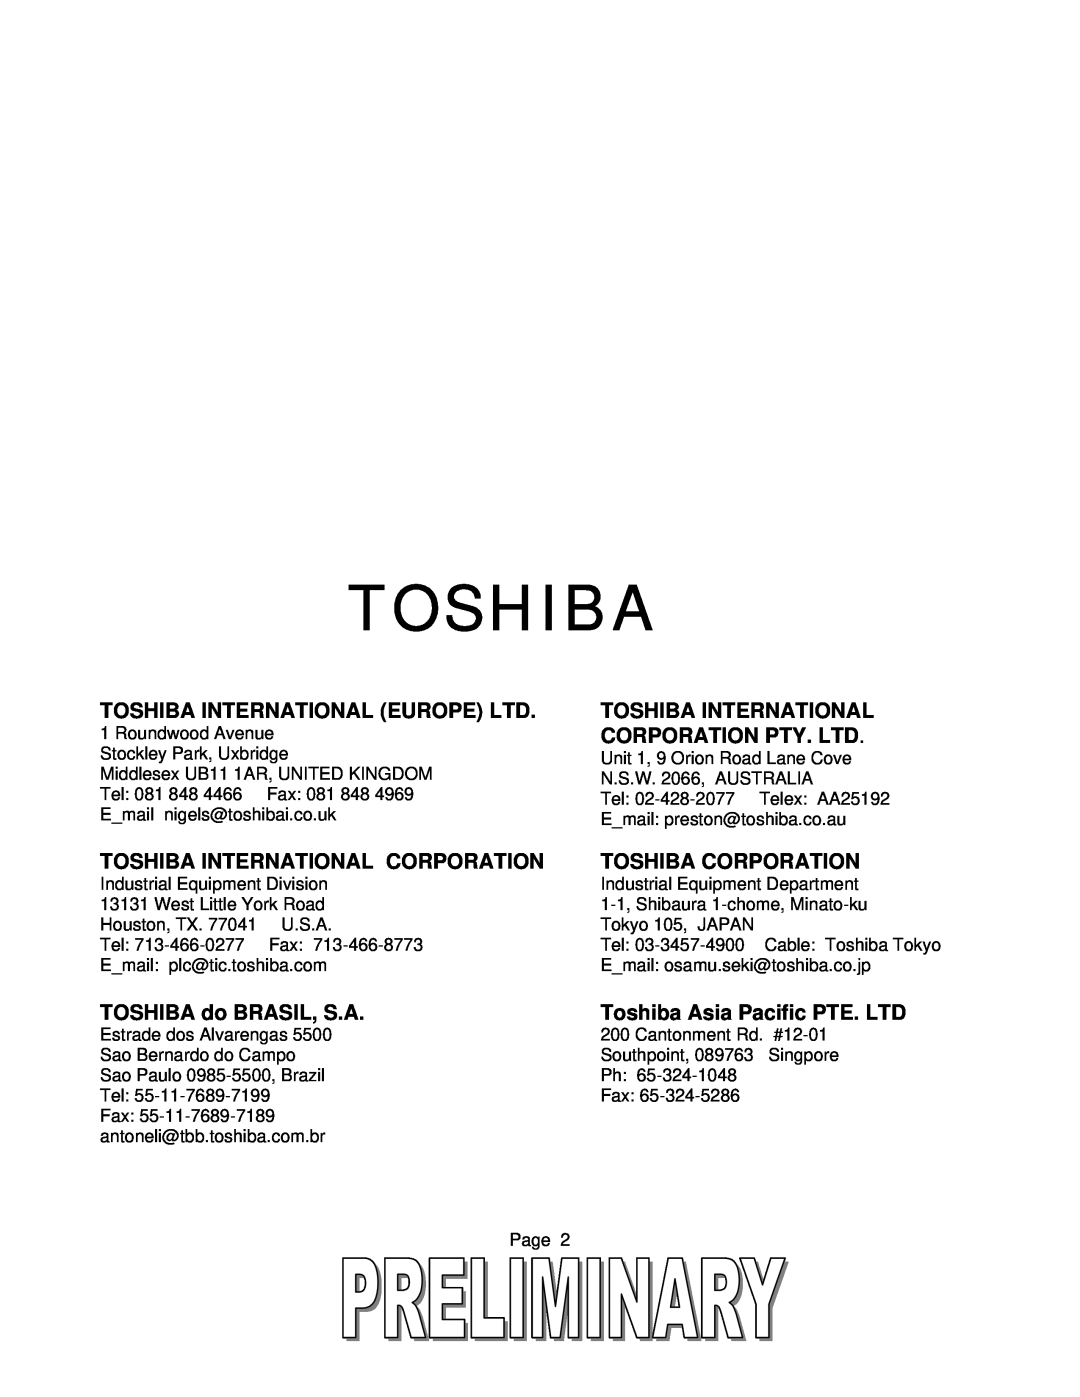 Toshiba T2 Series user manual Toshiba International Corporation, Toshiba Corporation, TOSHIBA do BRASIL, S.A 